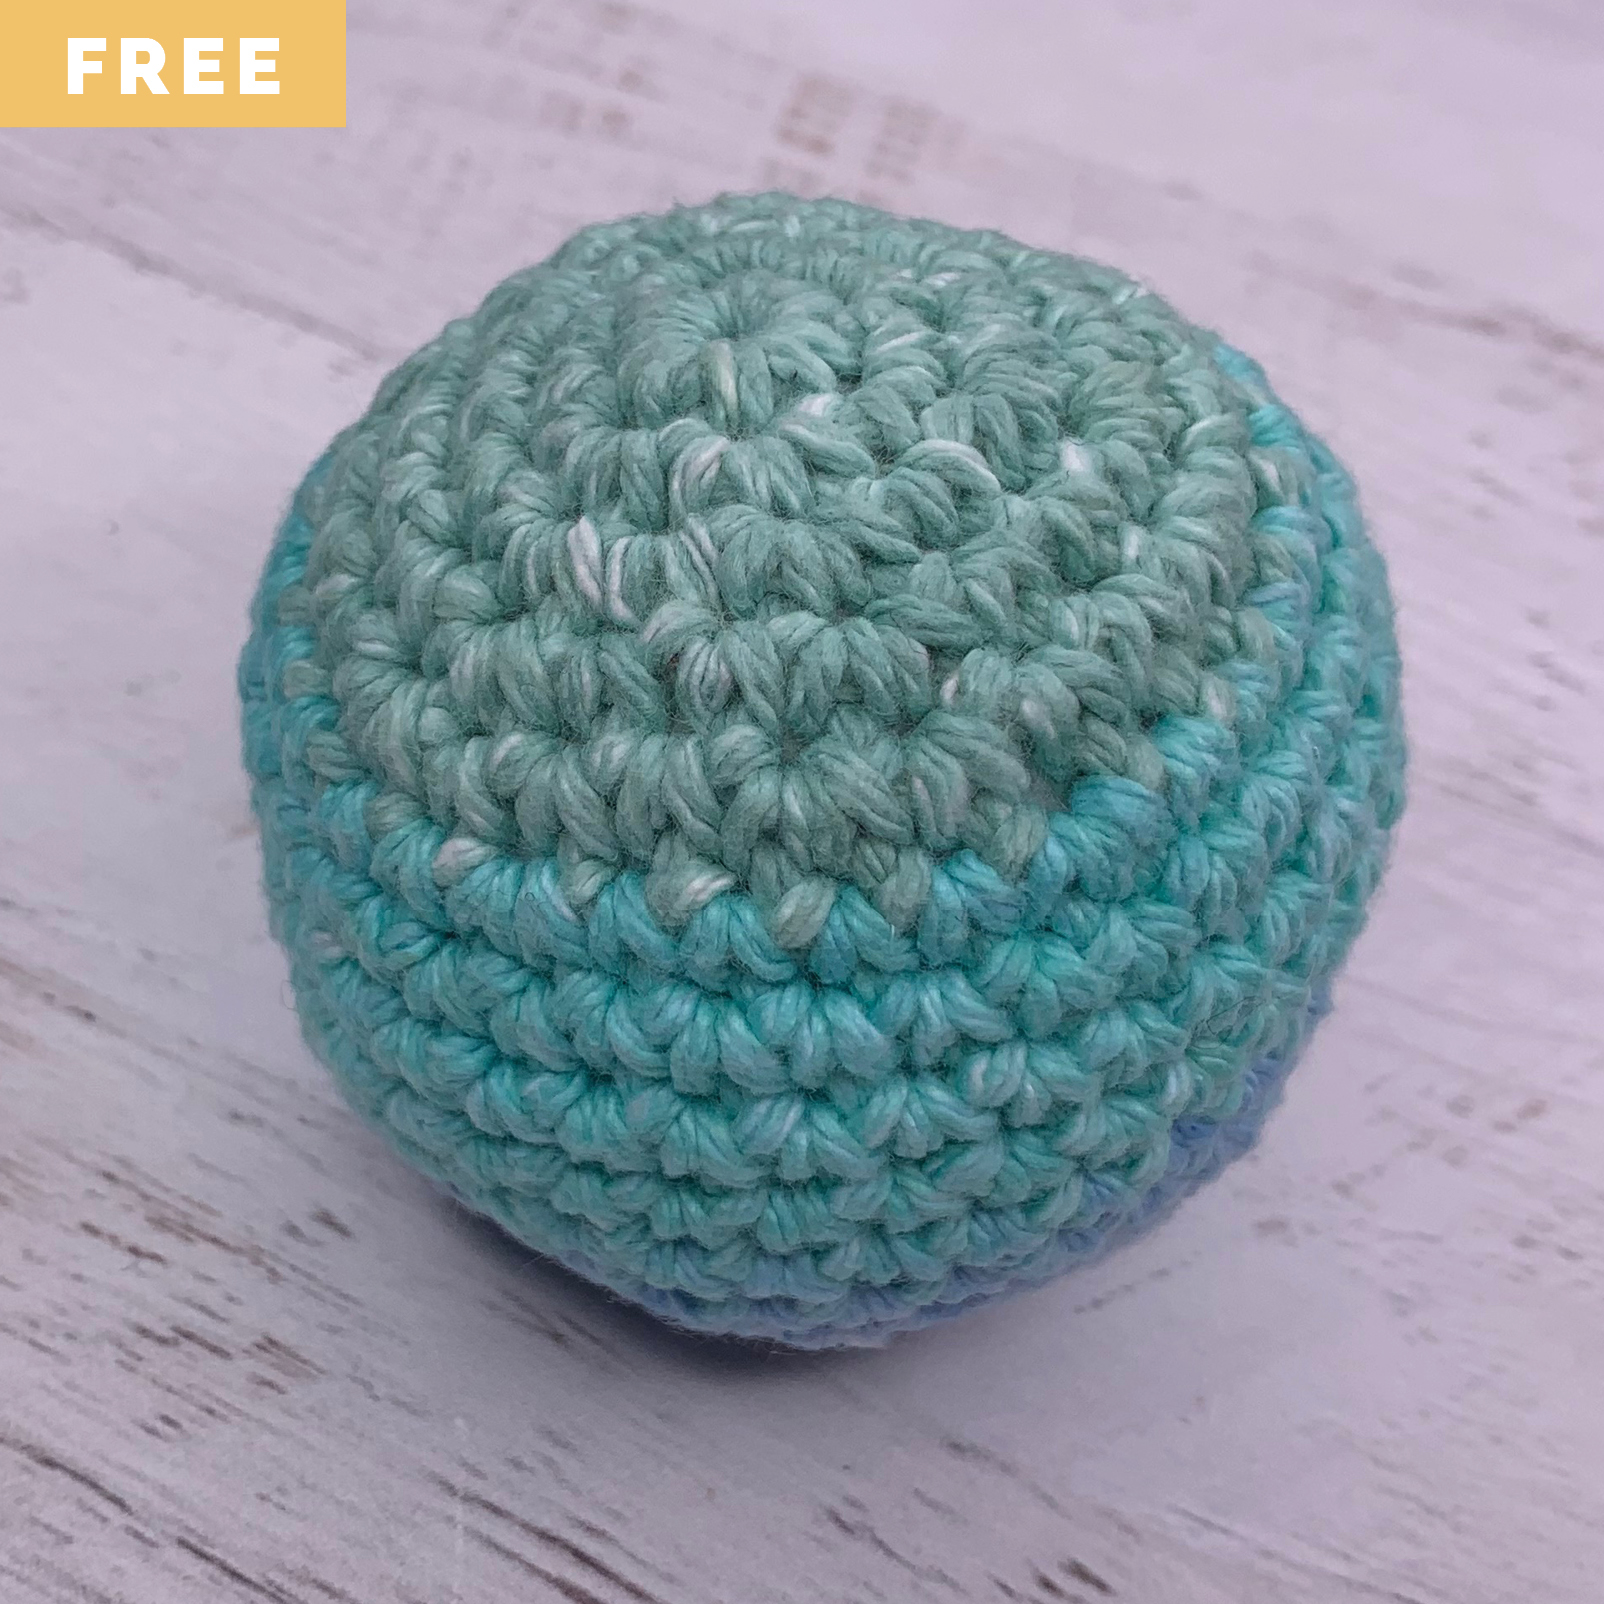 Free Crochet Pattern - Ball Toy